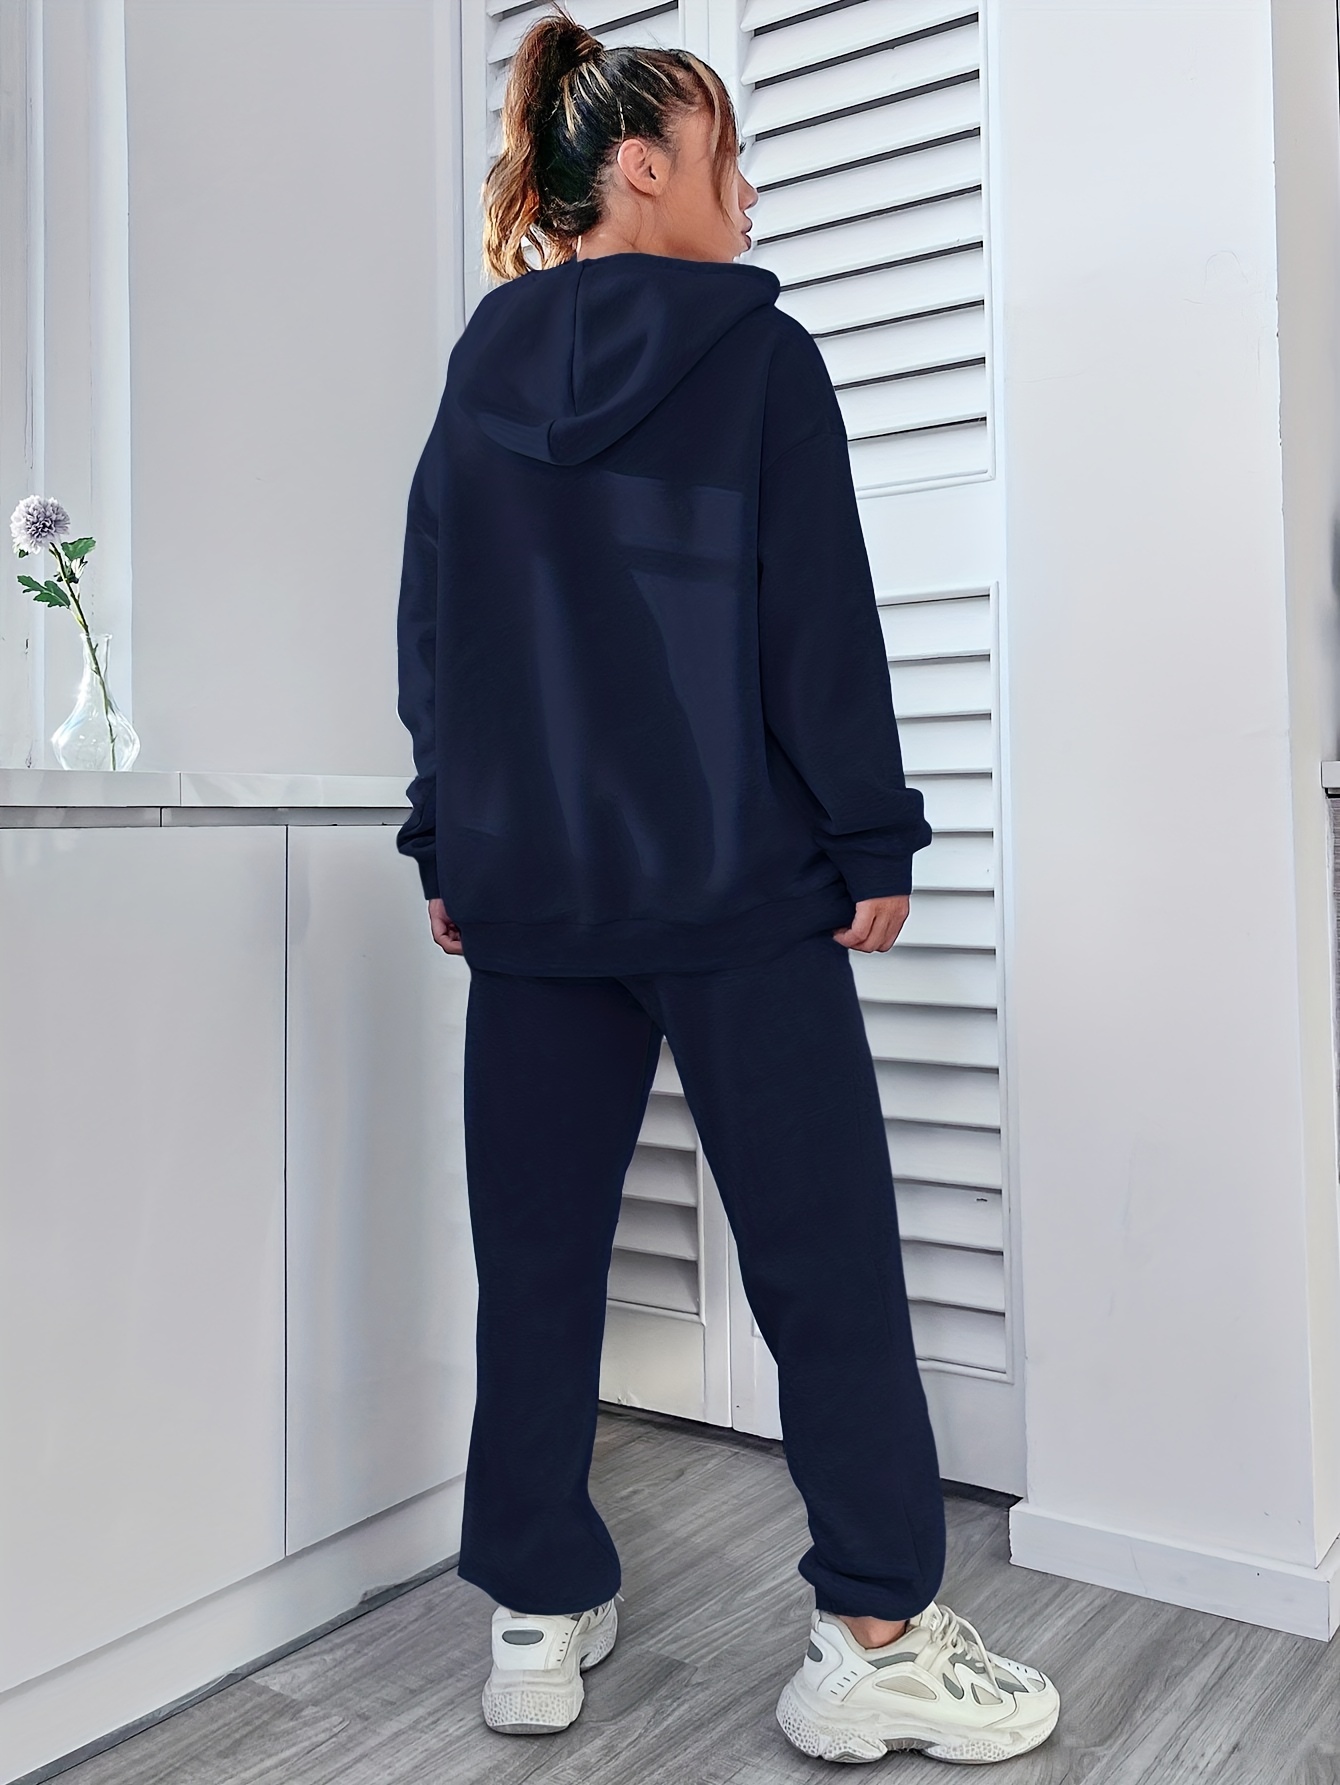 Cindysus Women Two Piece Outfit Plus Size Sweatsuit Hoodie Jogger Set  Casual Jogging Long Sleeve Tracksuit Sets Navy Blue XL 